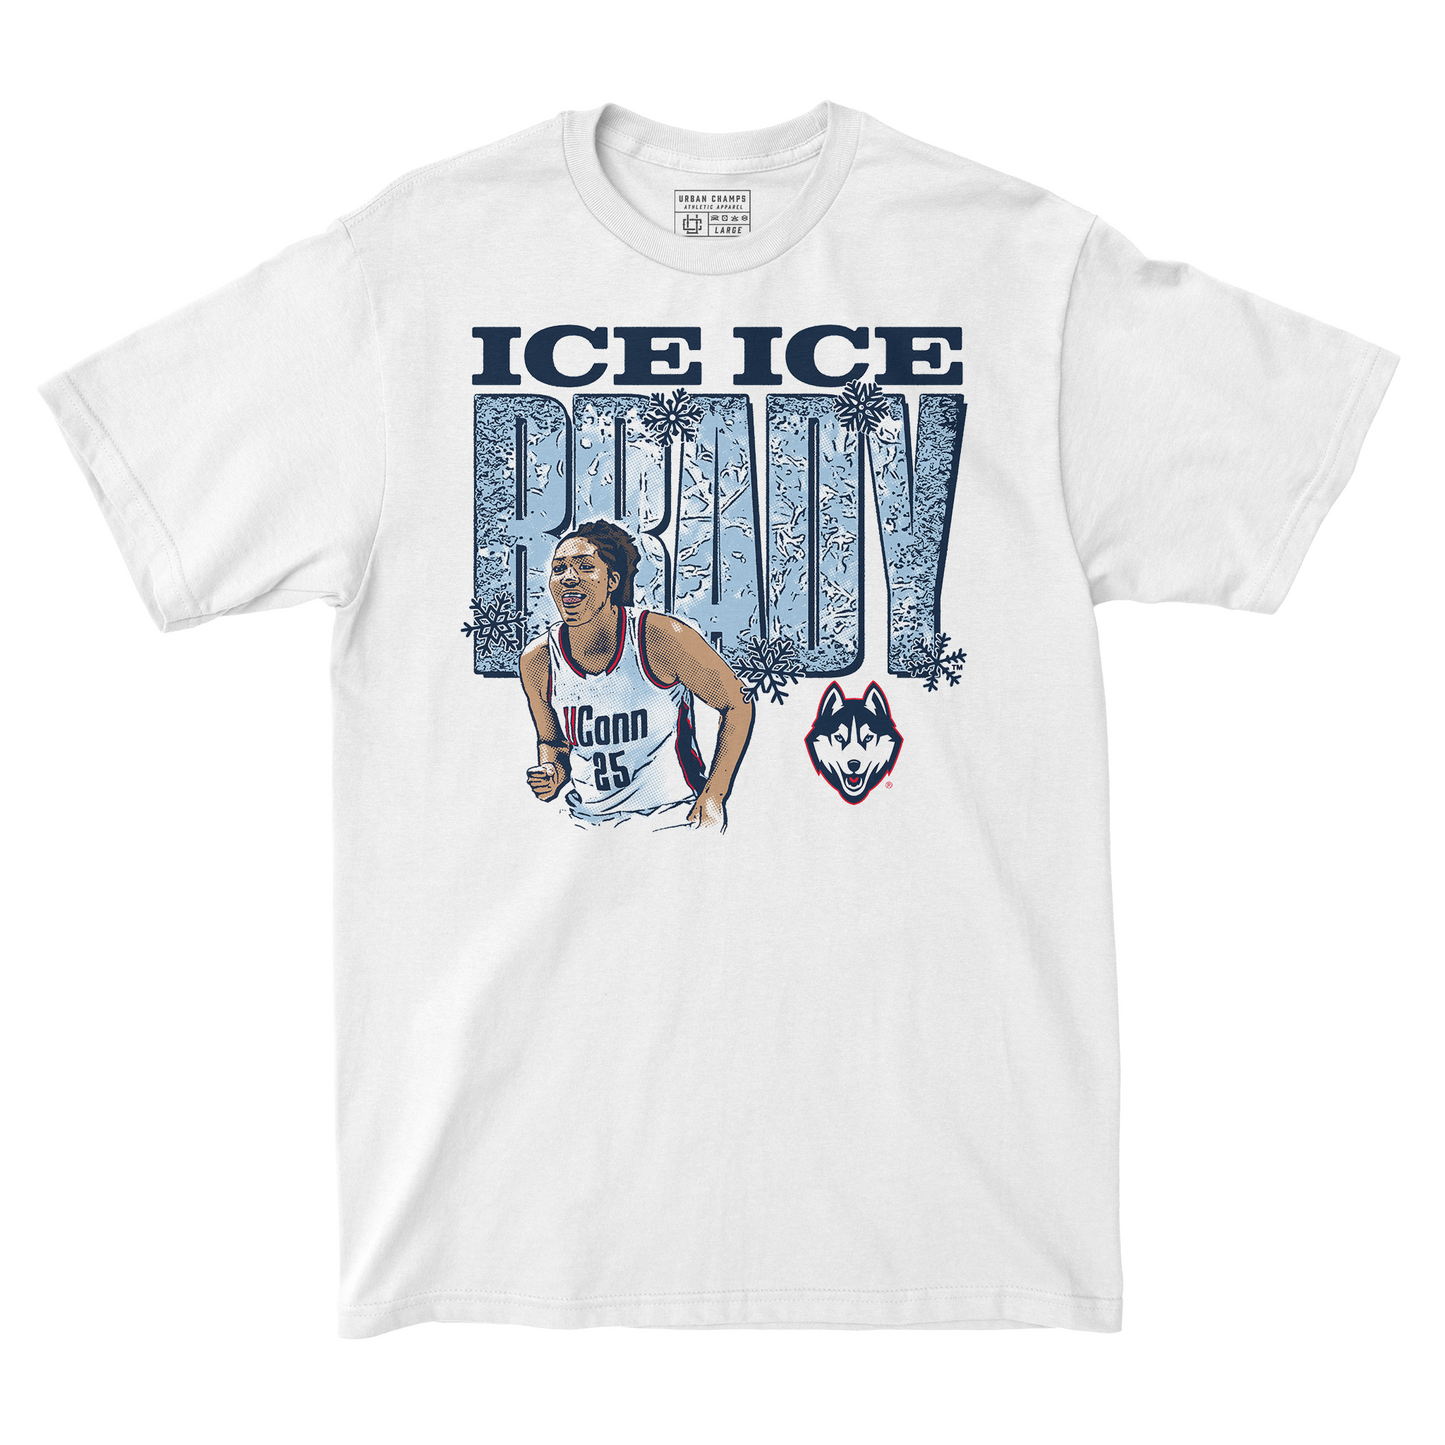 EXCLUSIVE RELEASE: Ice Brady - Ice Ice Drop Tee